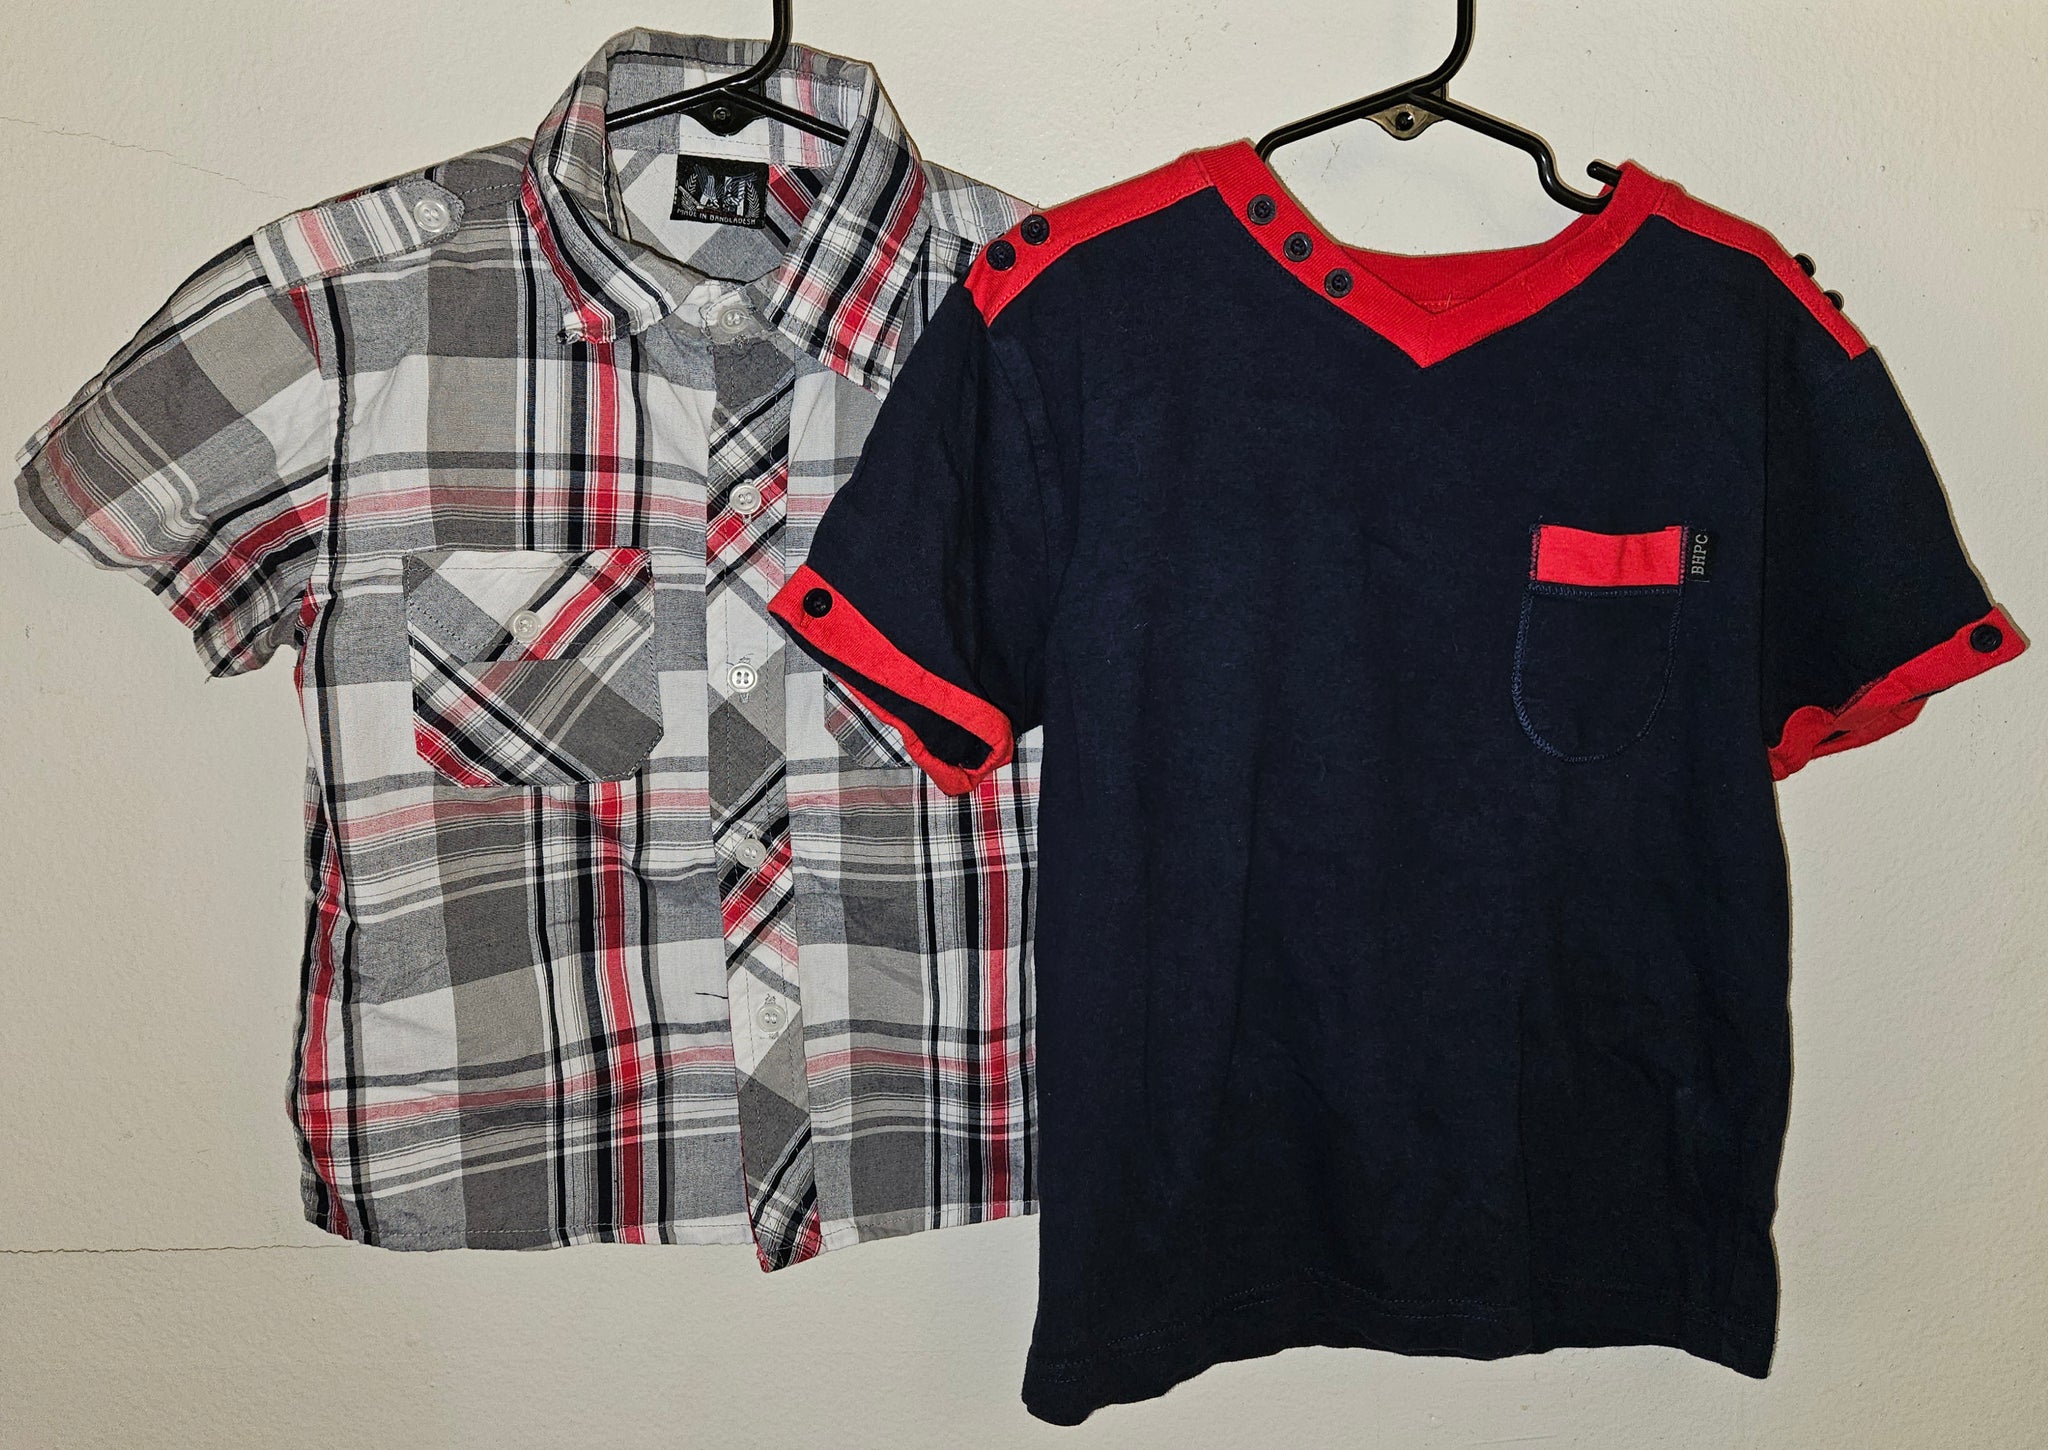 4T Boys 2-Pc Shirt Lot (Plaid Button Down & BHPC)